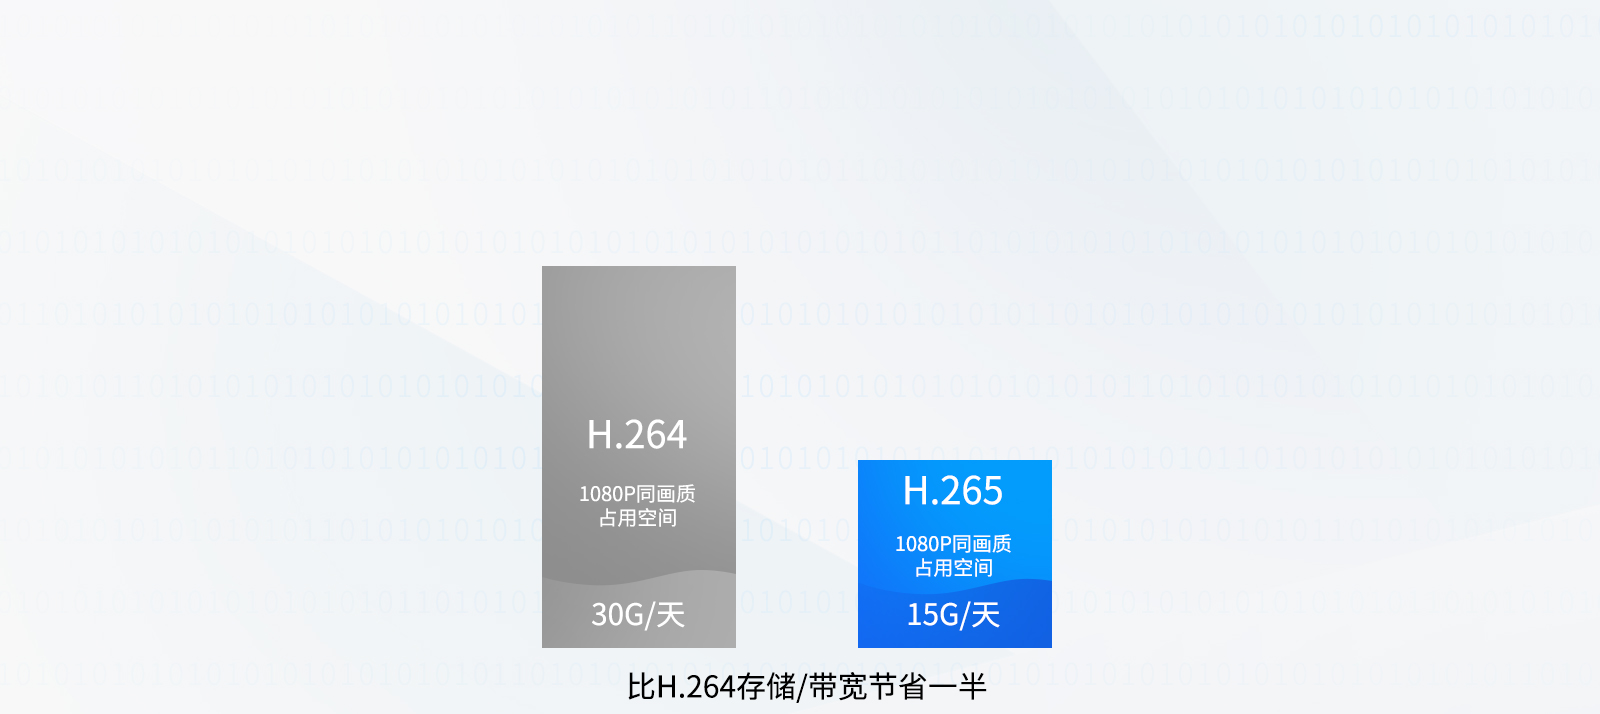 i.MX8M支持H.265、VP9解码器